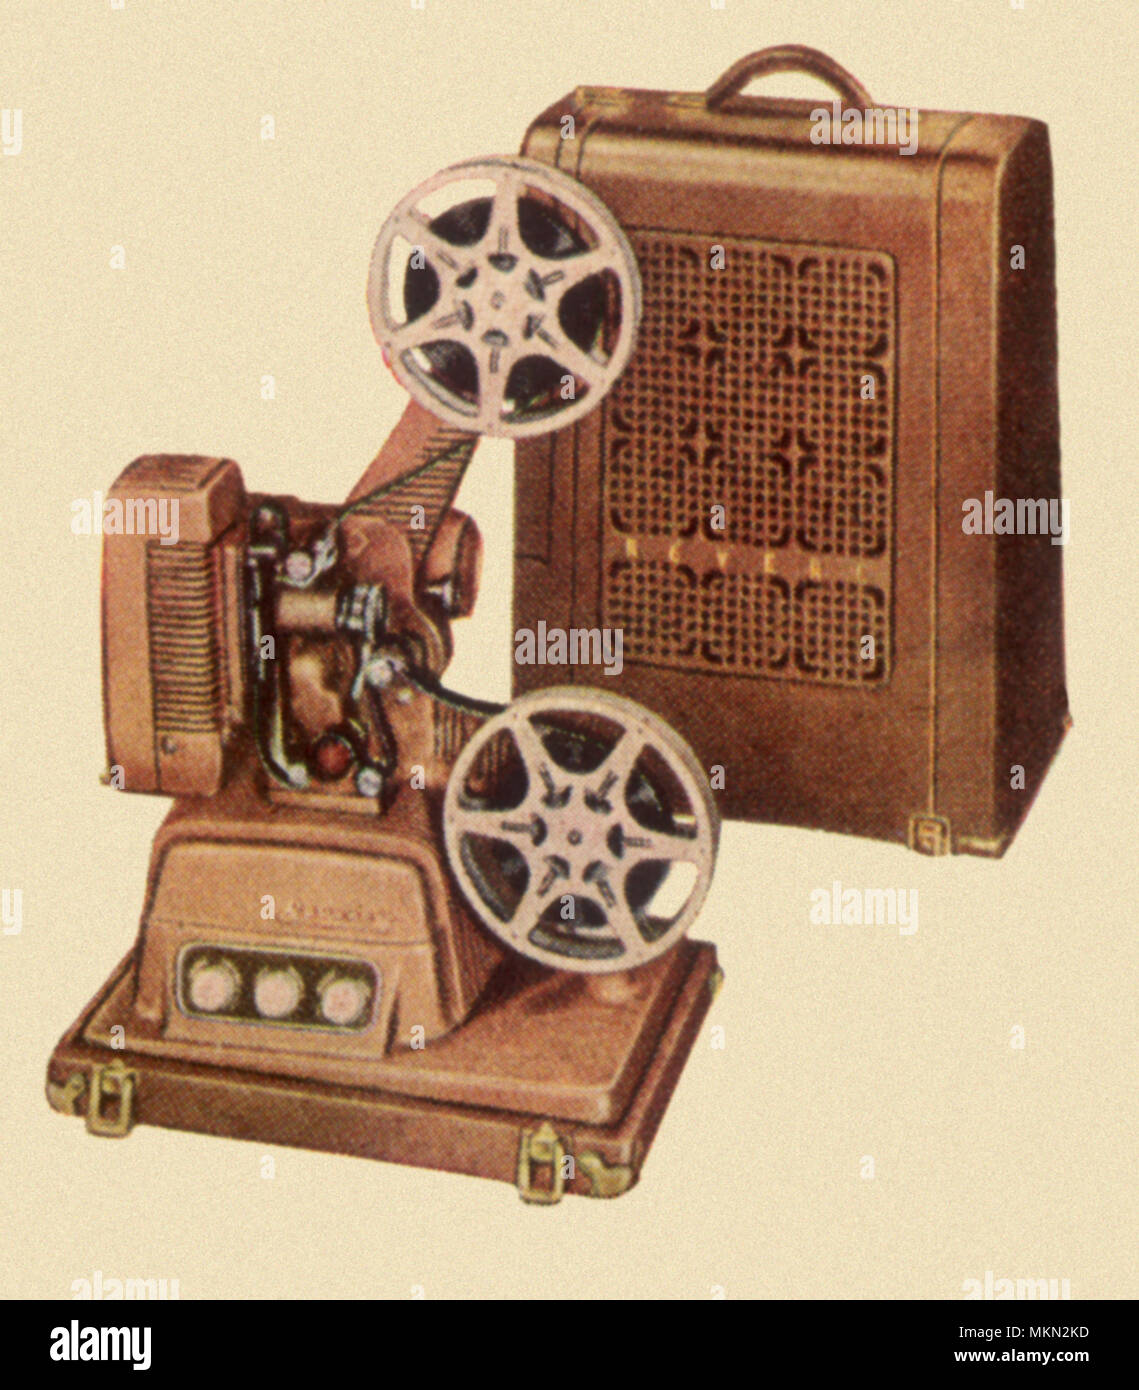 Sixteen Millimeter Film Projector Stock Photo